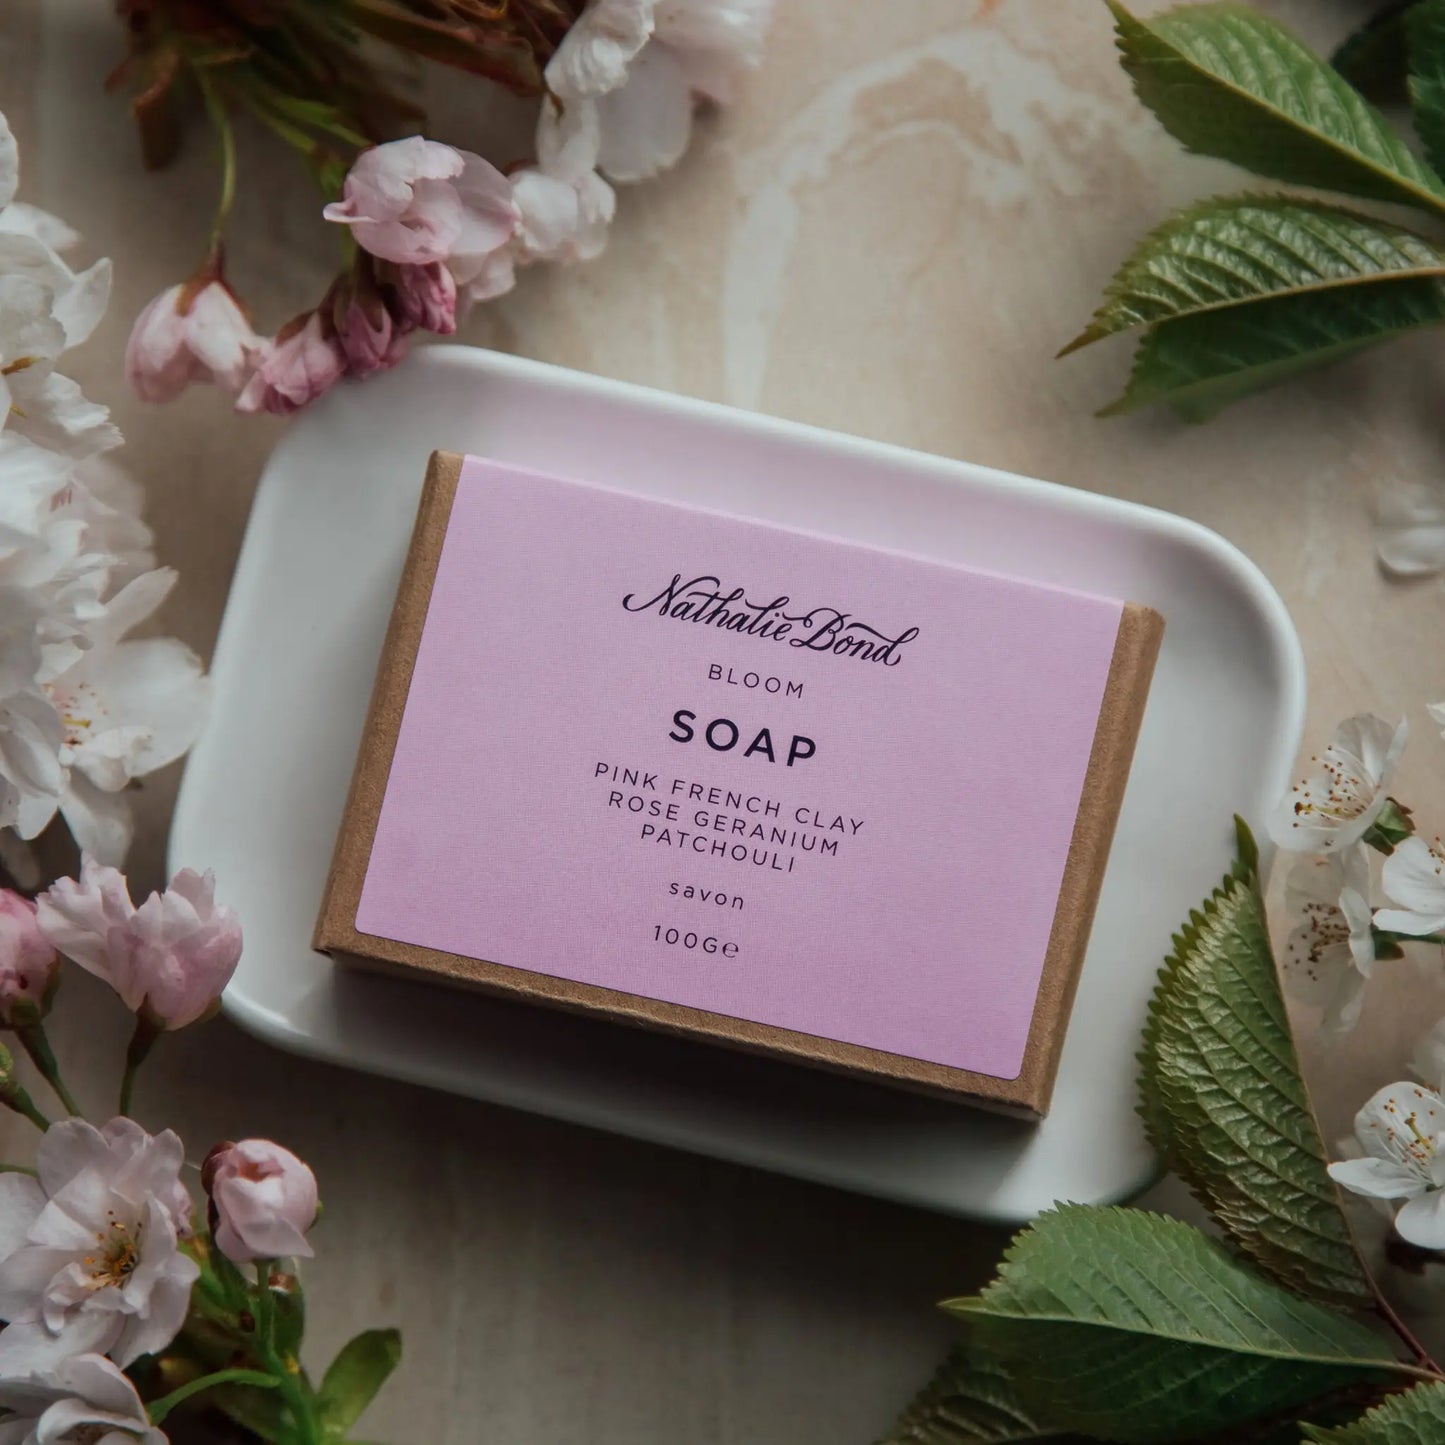 Nathalie Bond Bloom Soap Bar. A nourishing soap bar packed with gentle organic vegan ingredients